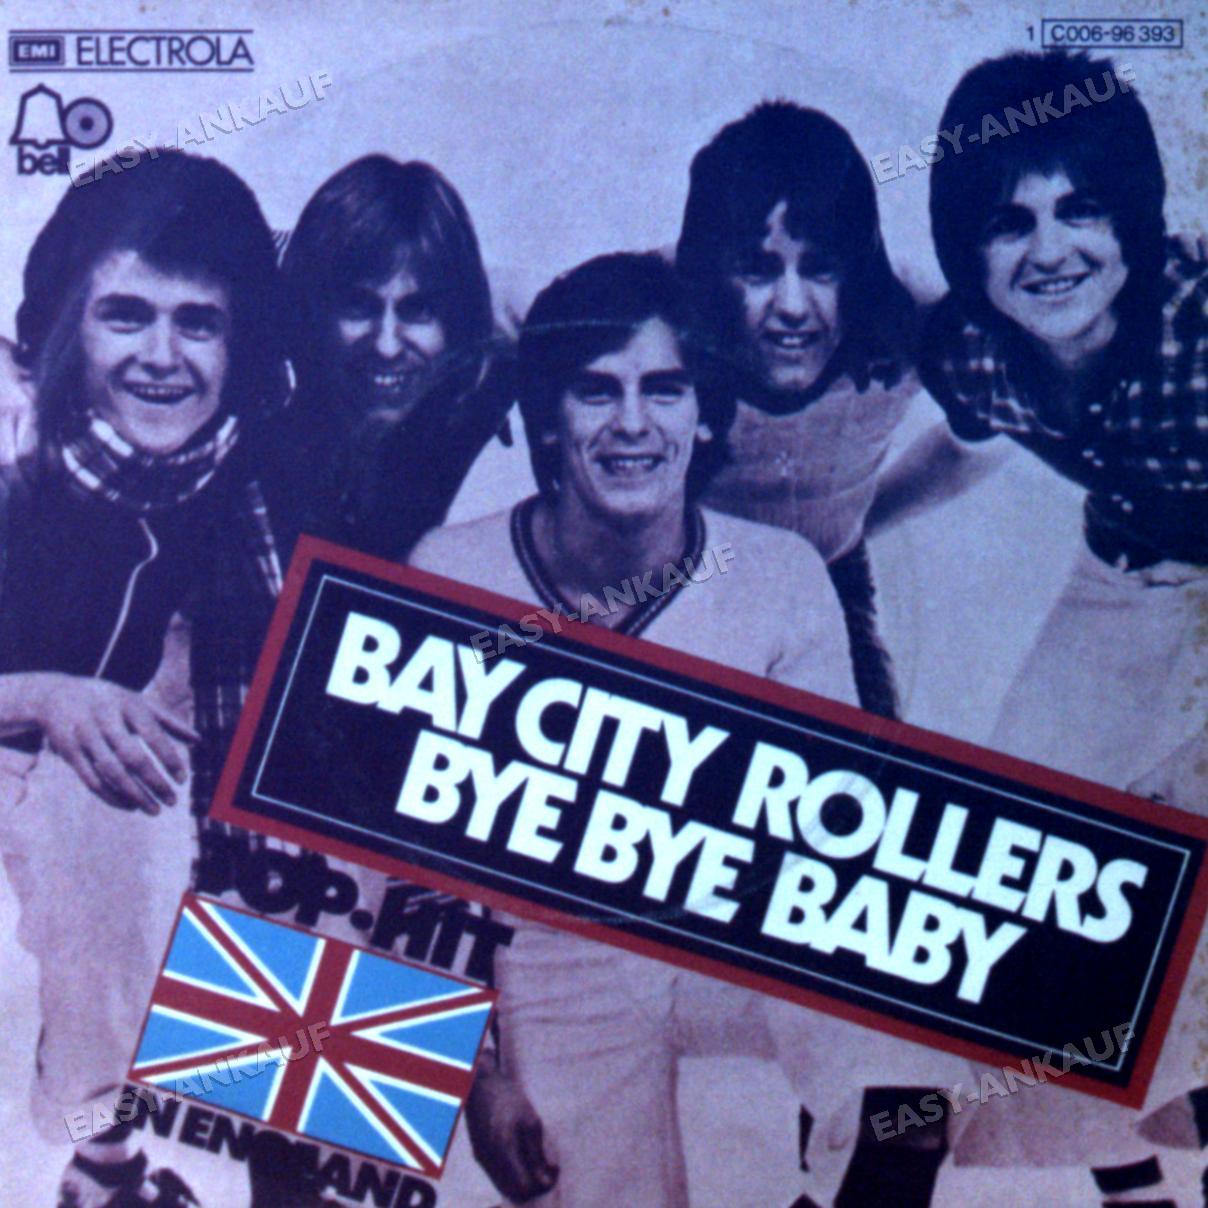 Bay City Rollers - Bye Bye Baby 7in 1974 (VG/VG) . - Bild 1 von 1